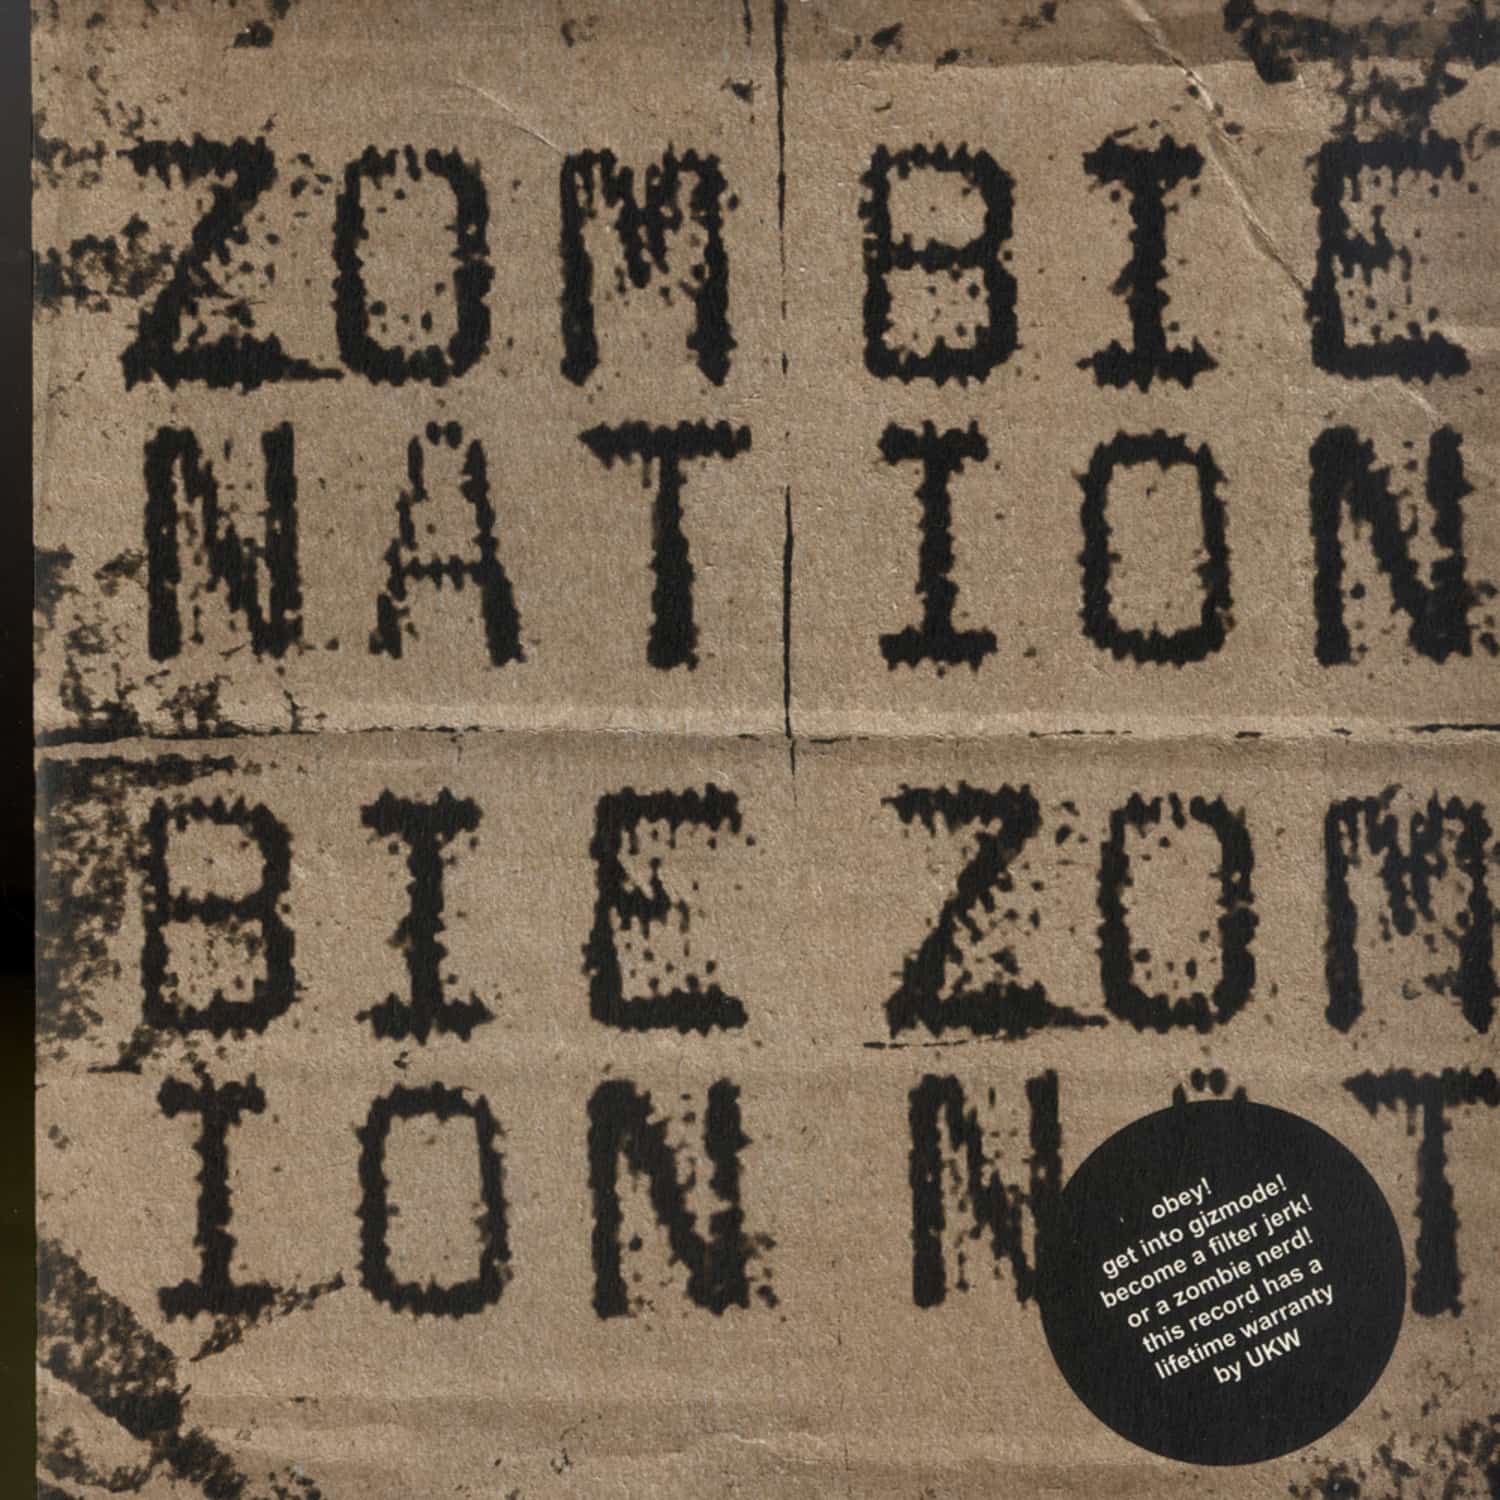 Zombie Nation - GIZMODE